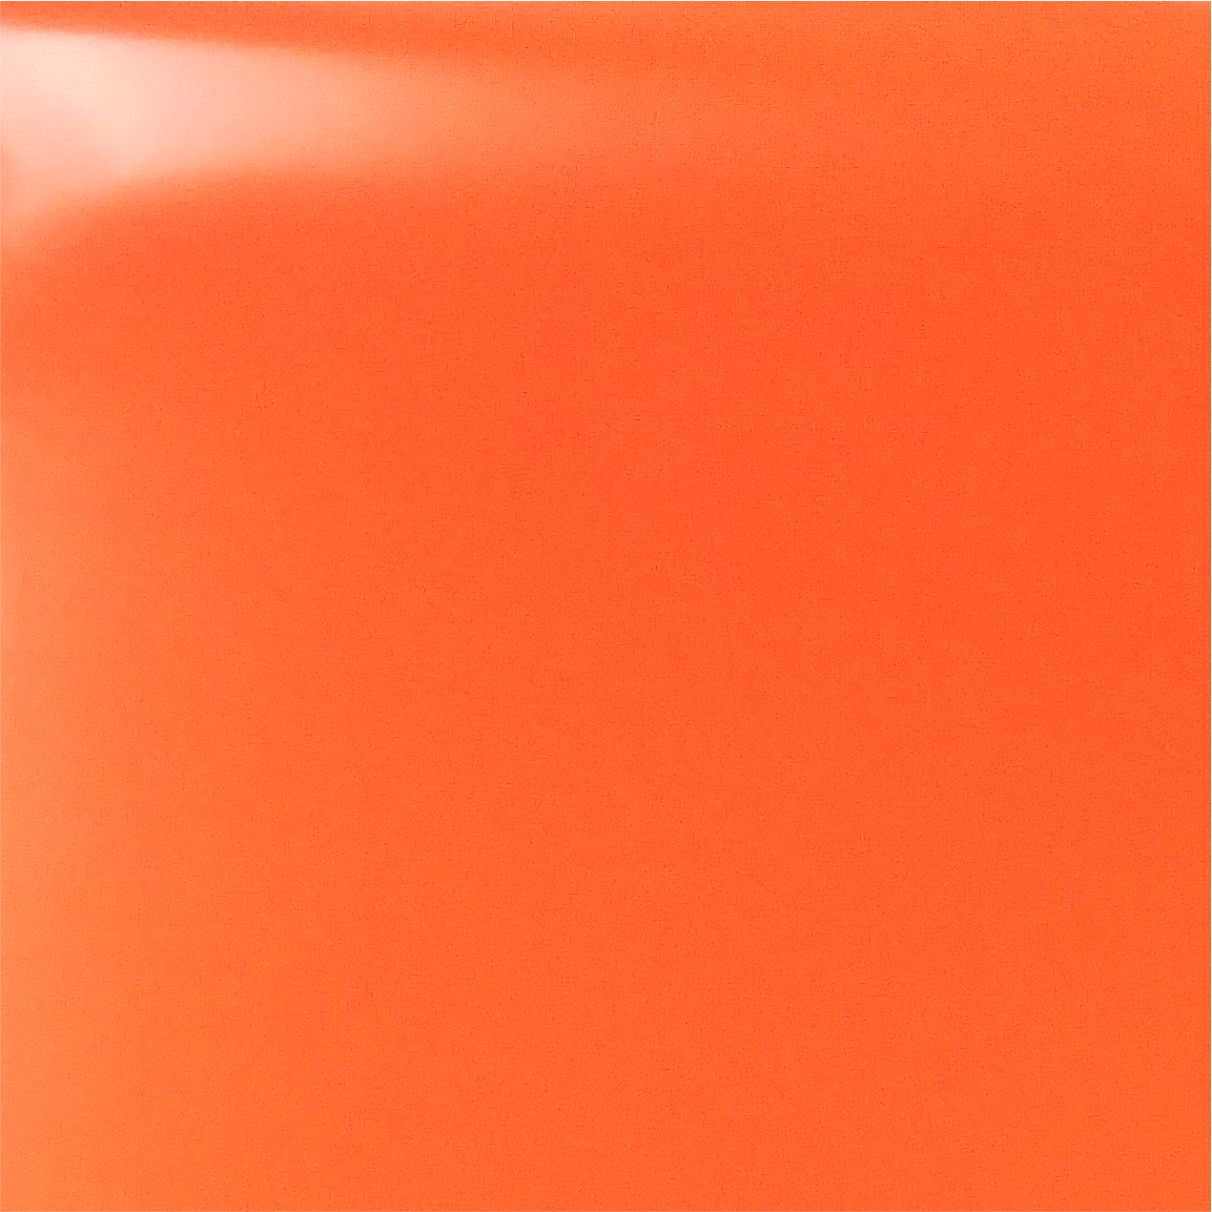 DecoFilm Gloss HTV-Neon Orange Choose Your Length CLEARANCE